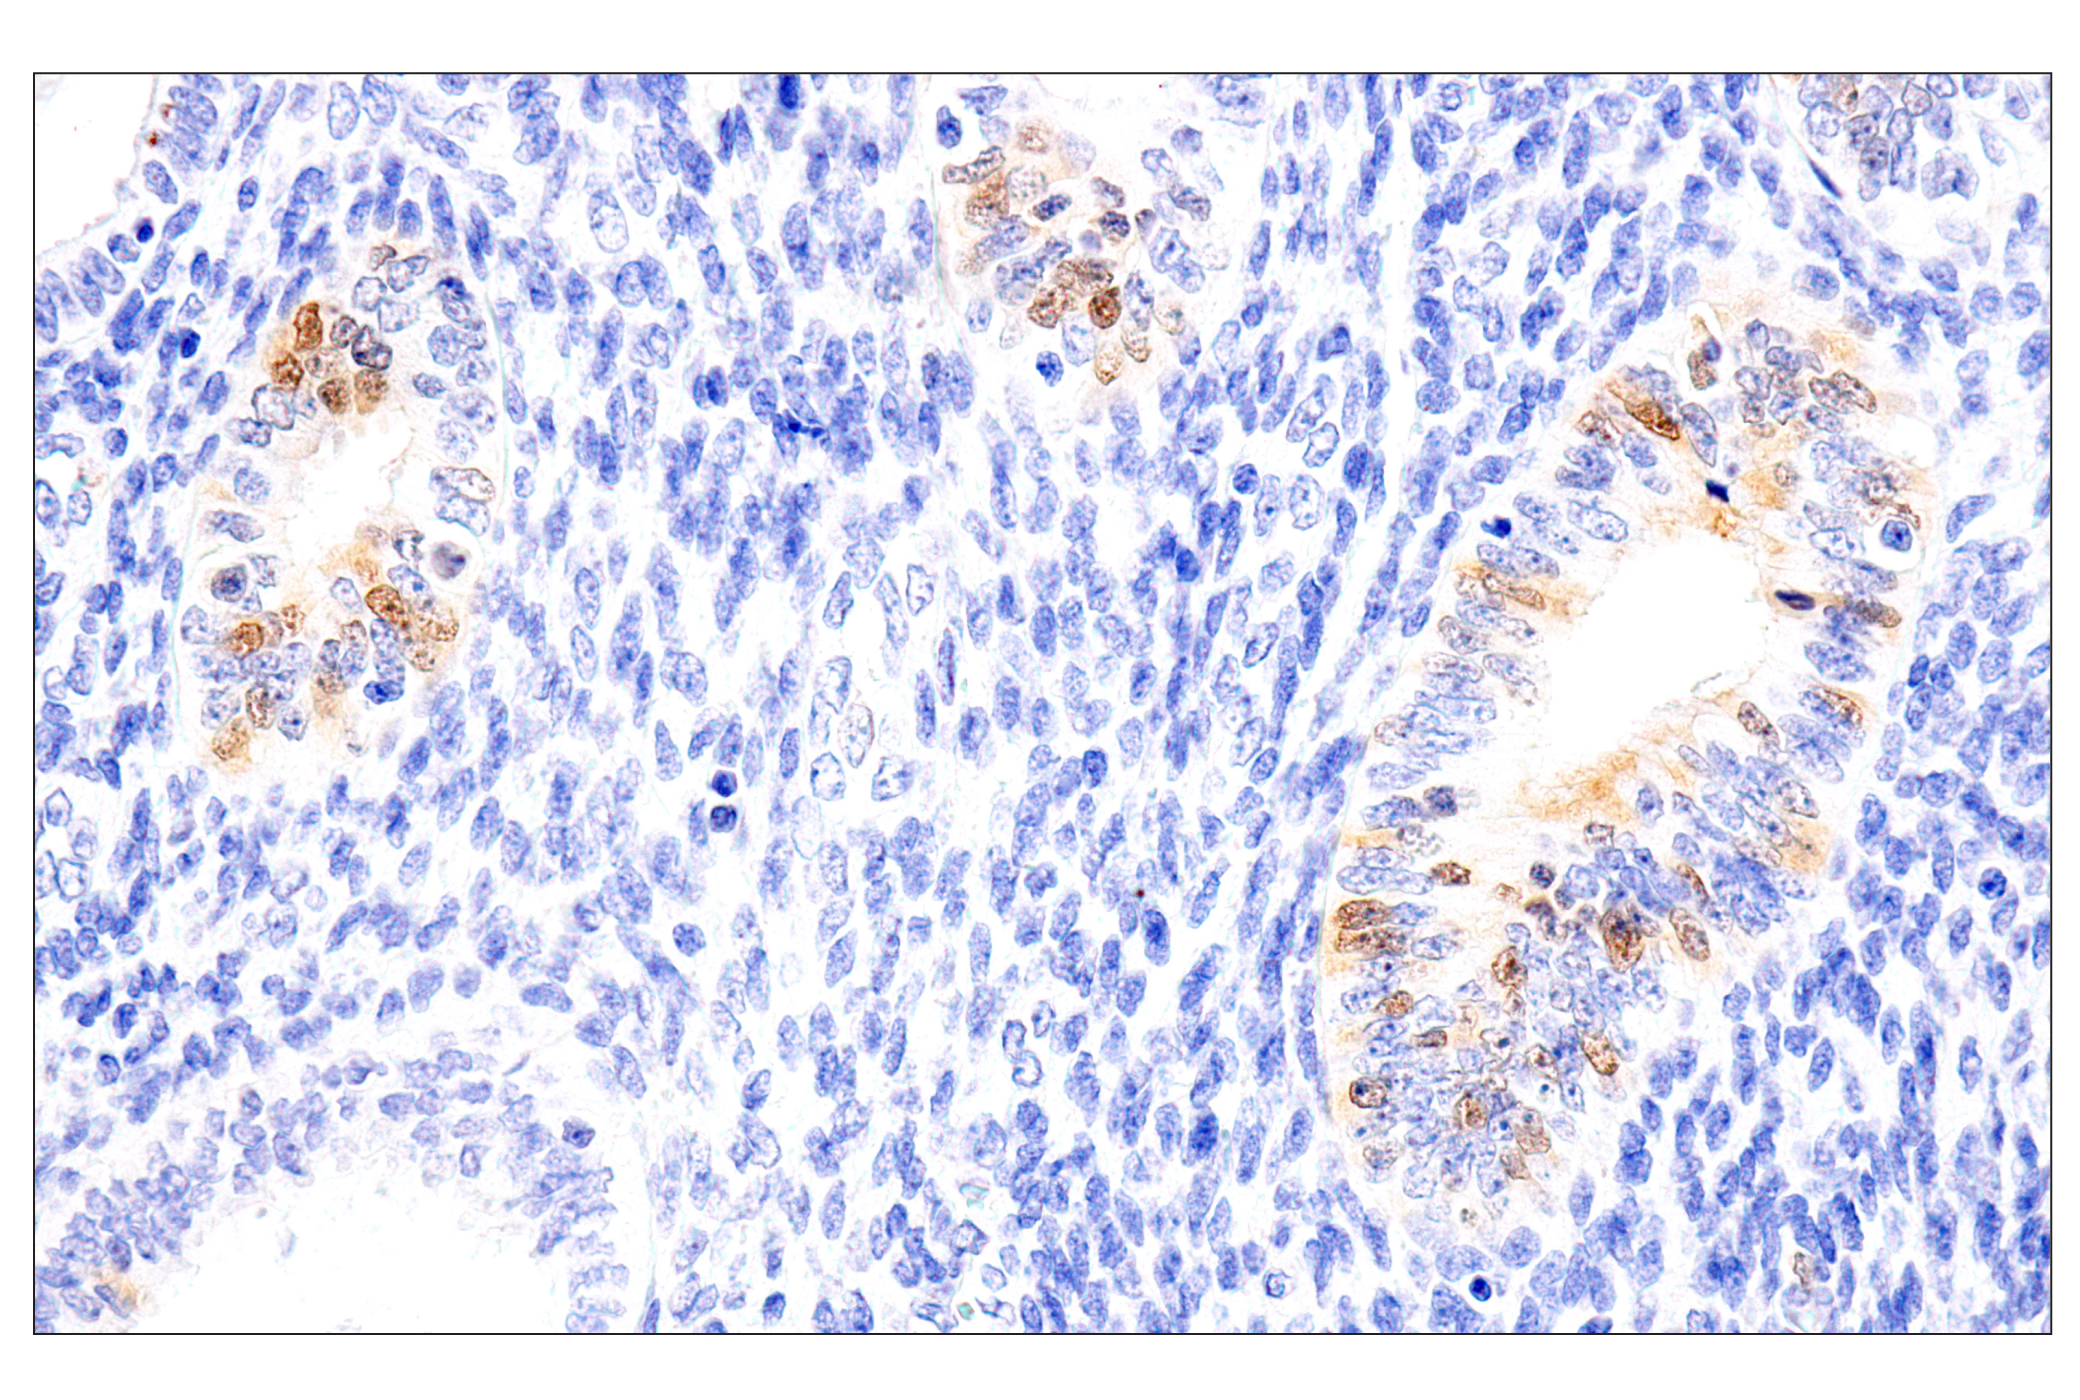  Image 15: PhosphoPlus® Chk1 (Ser317) Antibody Duet